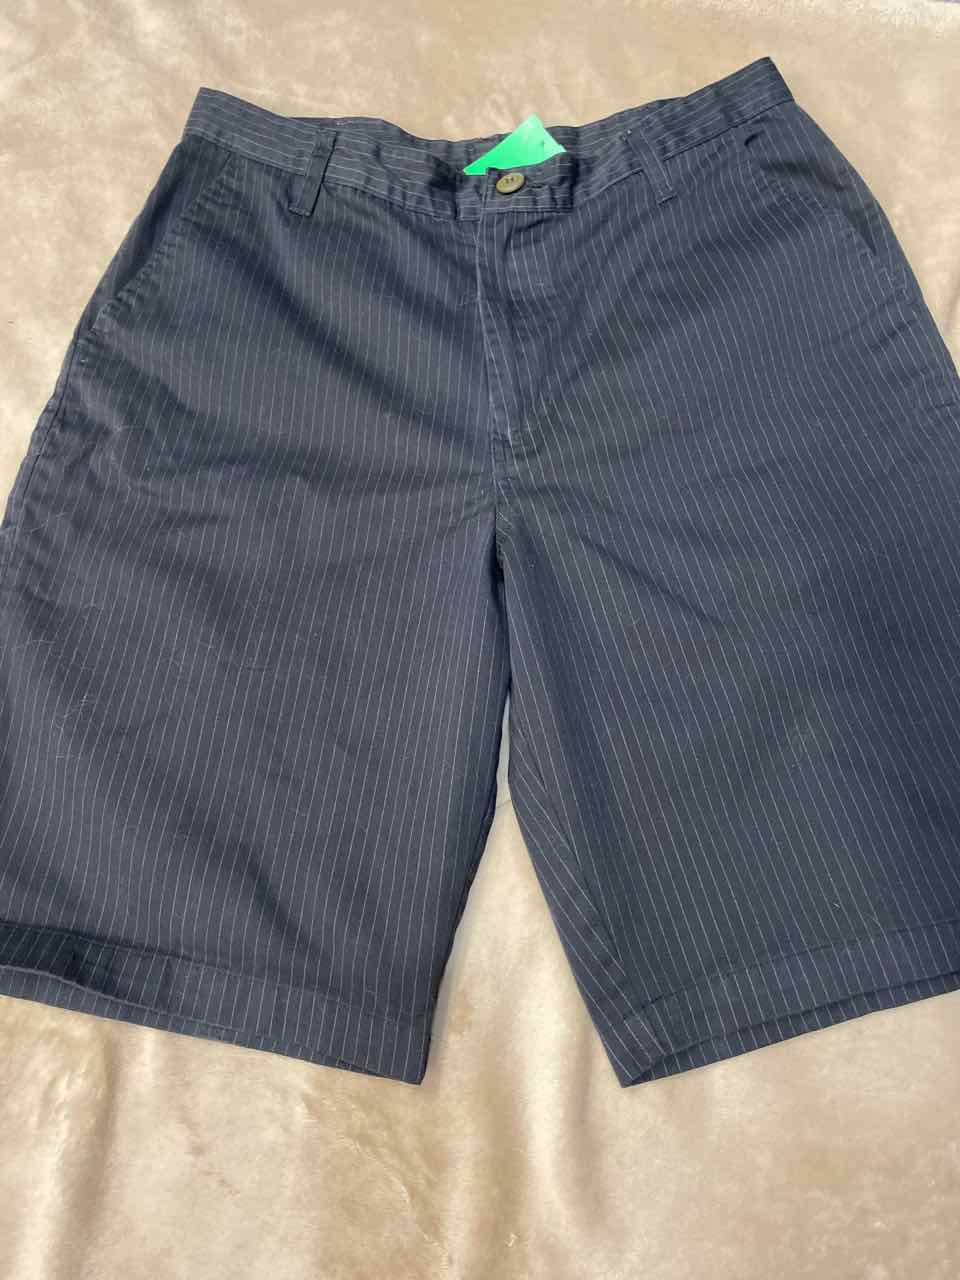 32 - burnside Shorts